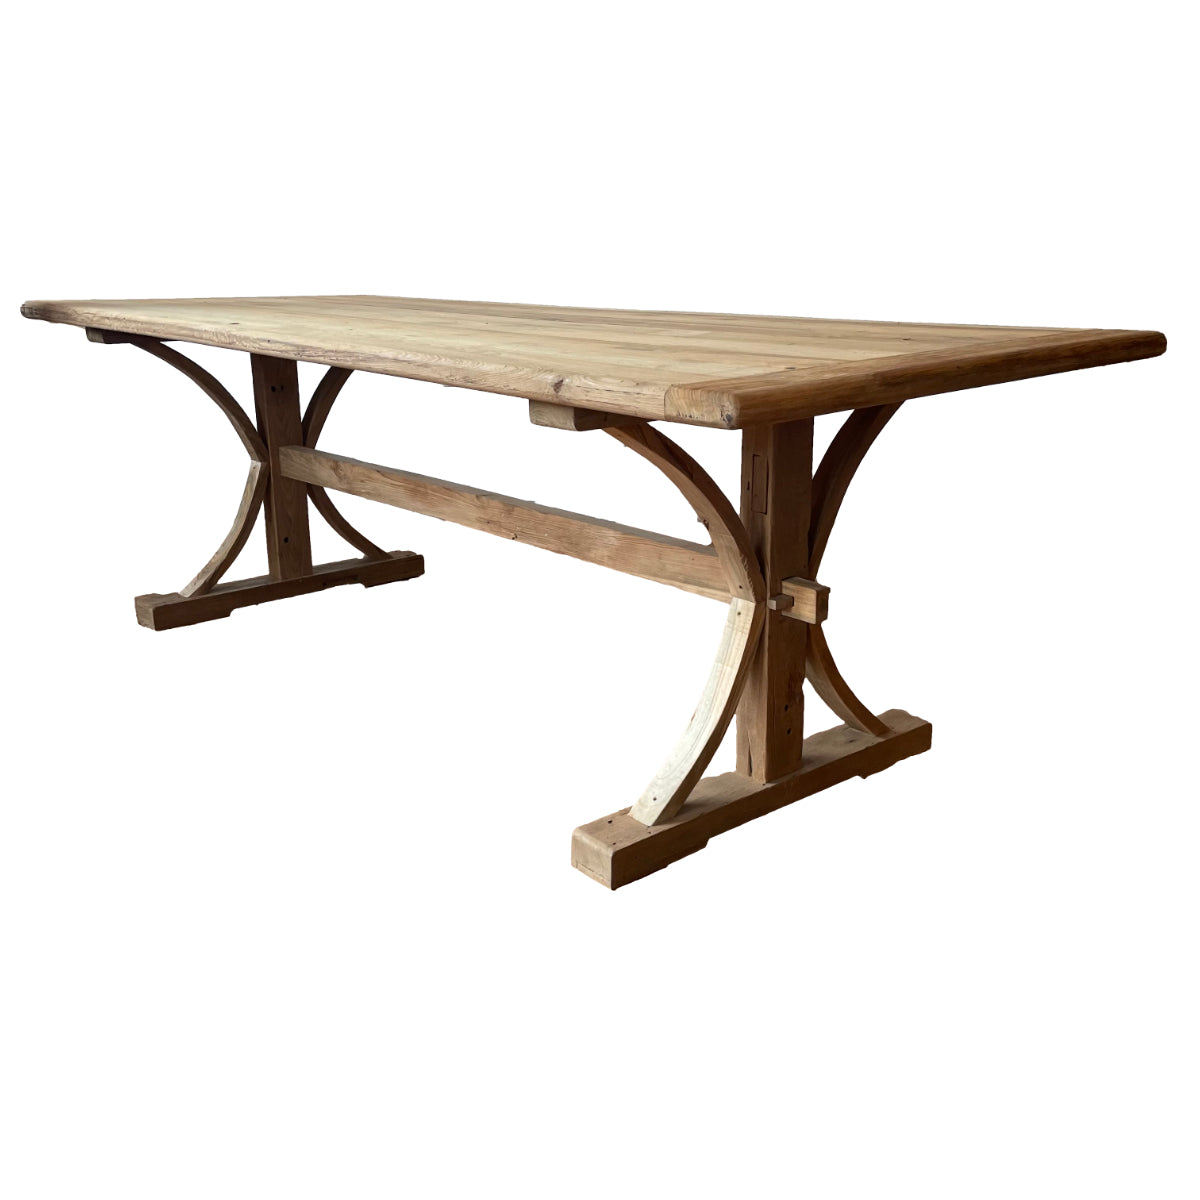 Teak Timber Curved Cross Leg Dining Table 2m x 1m